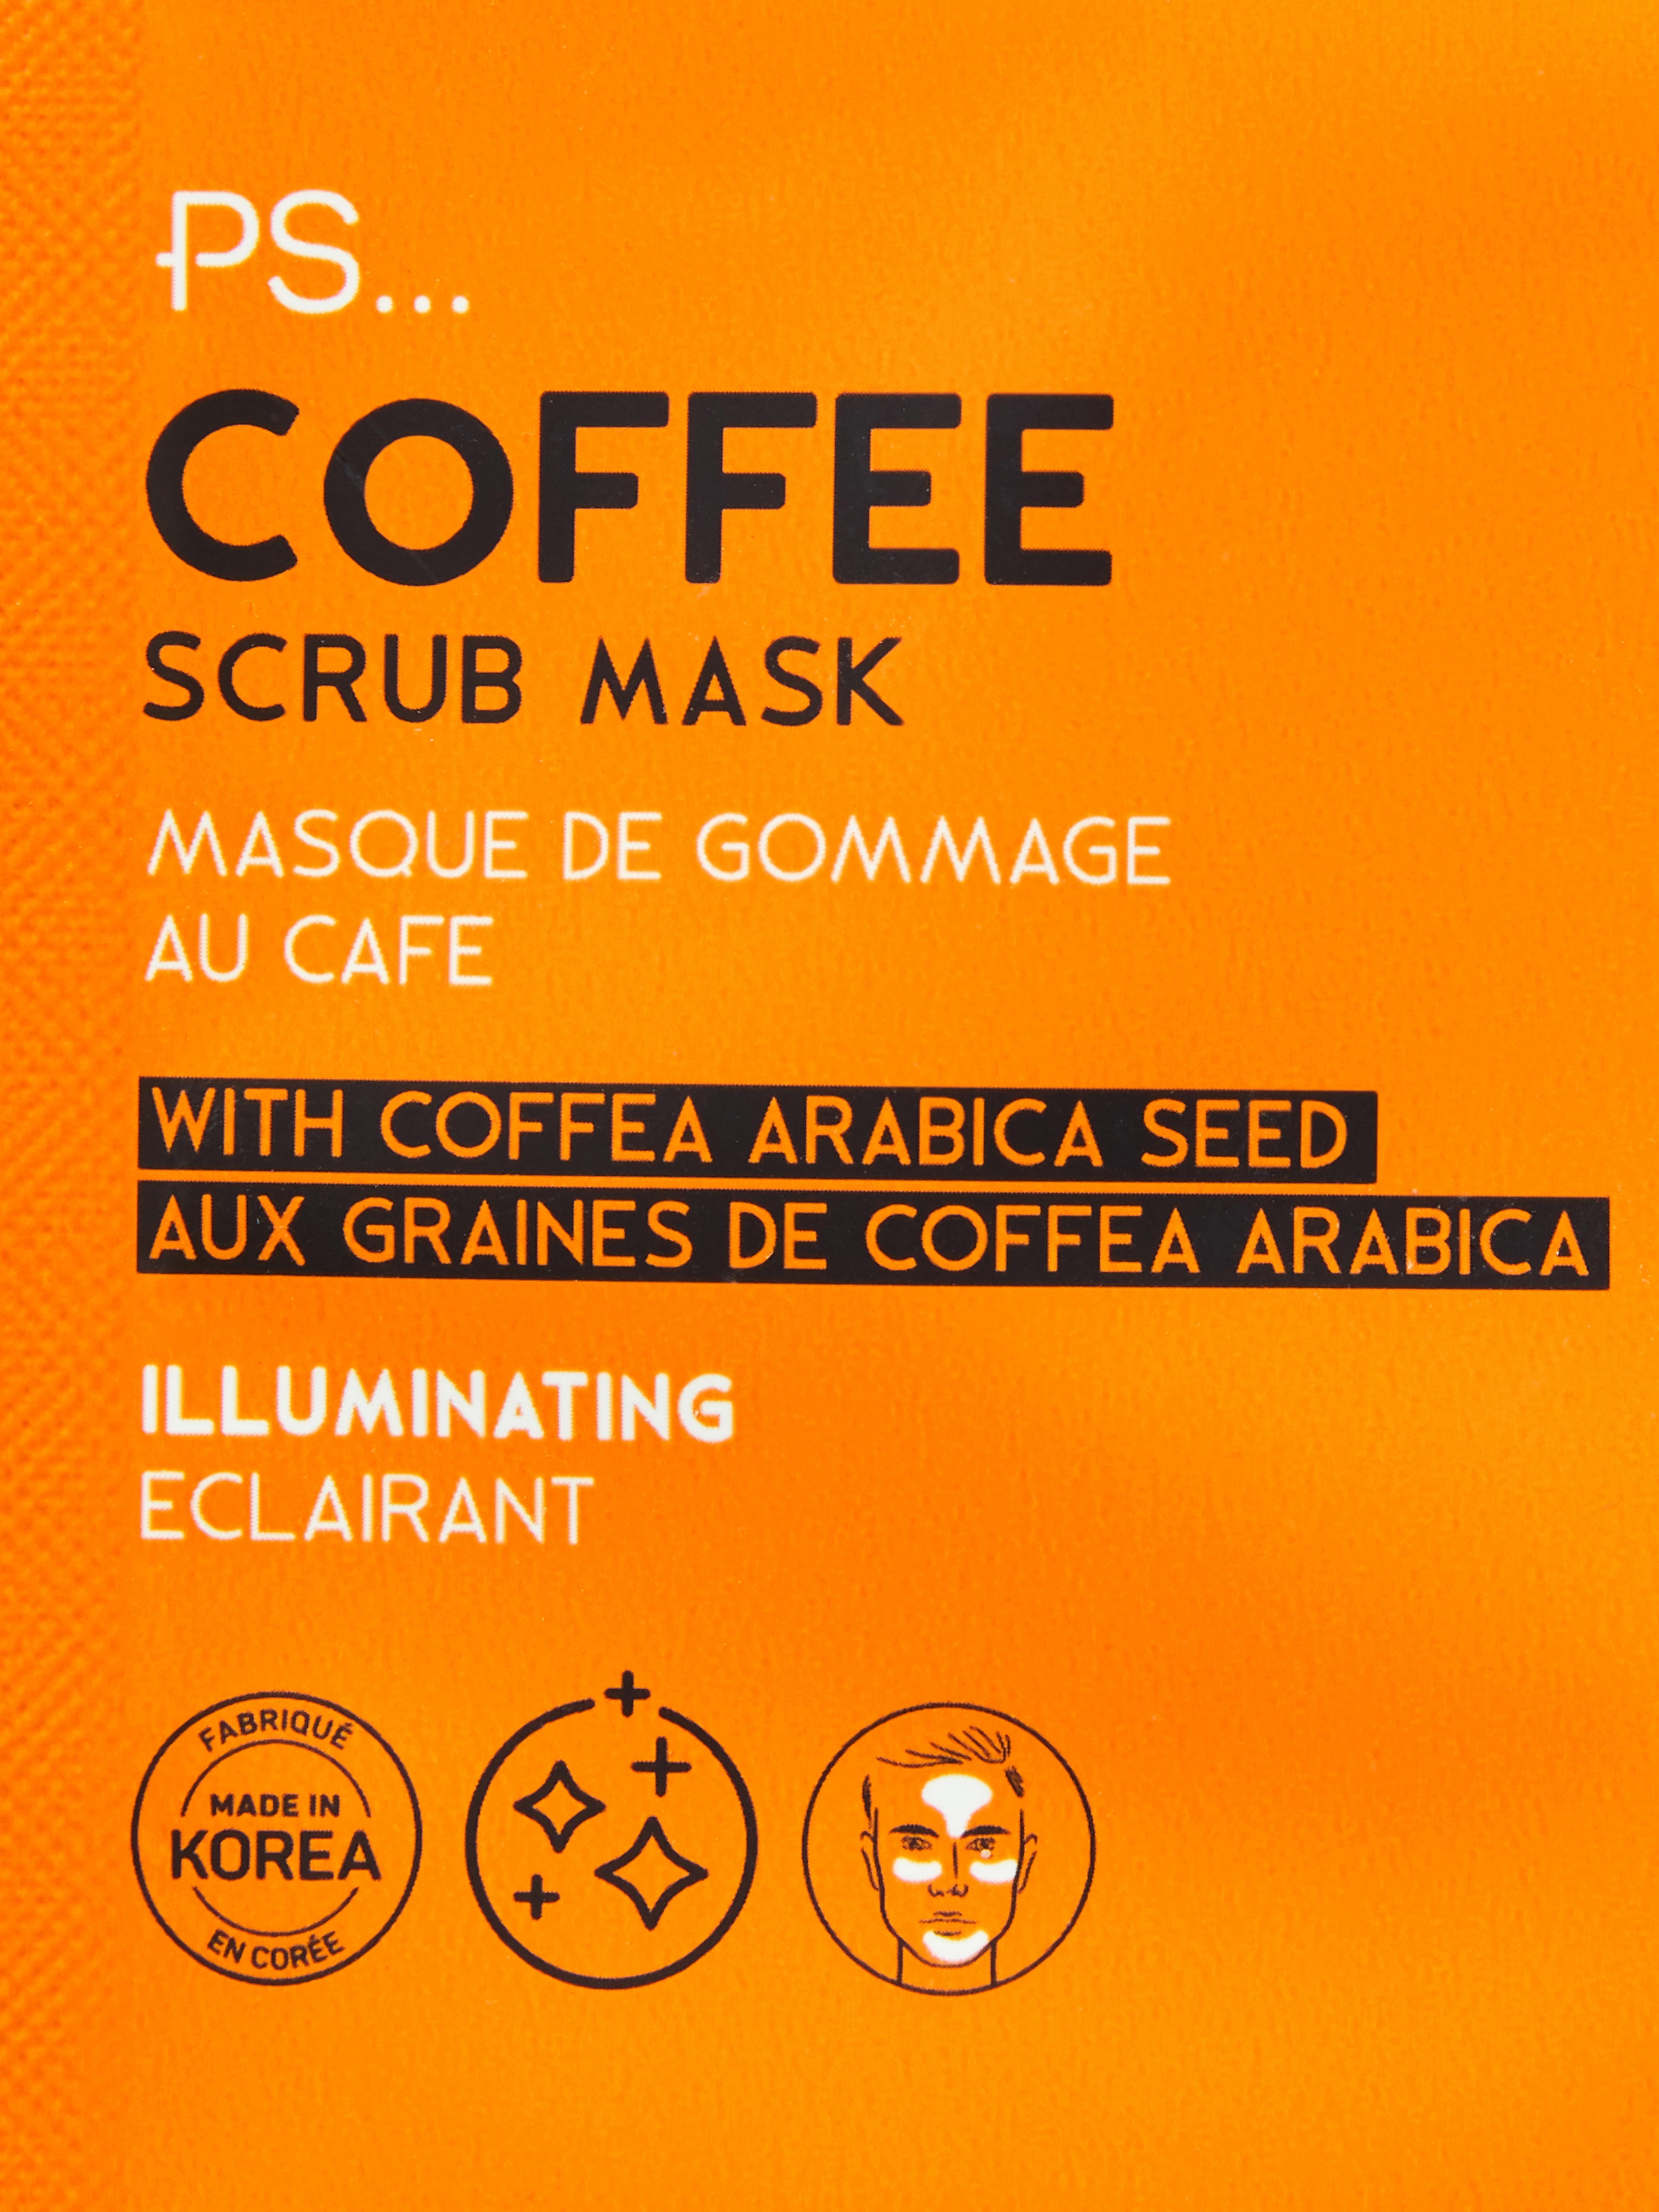 PS... Coffee Scrub Mask